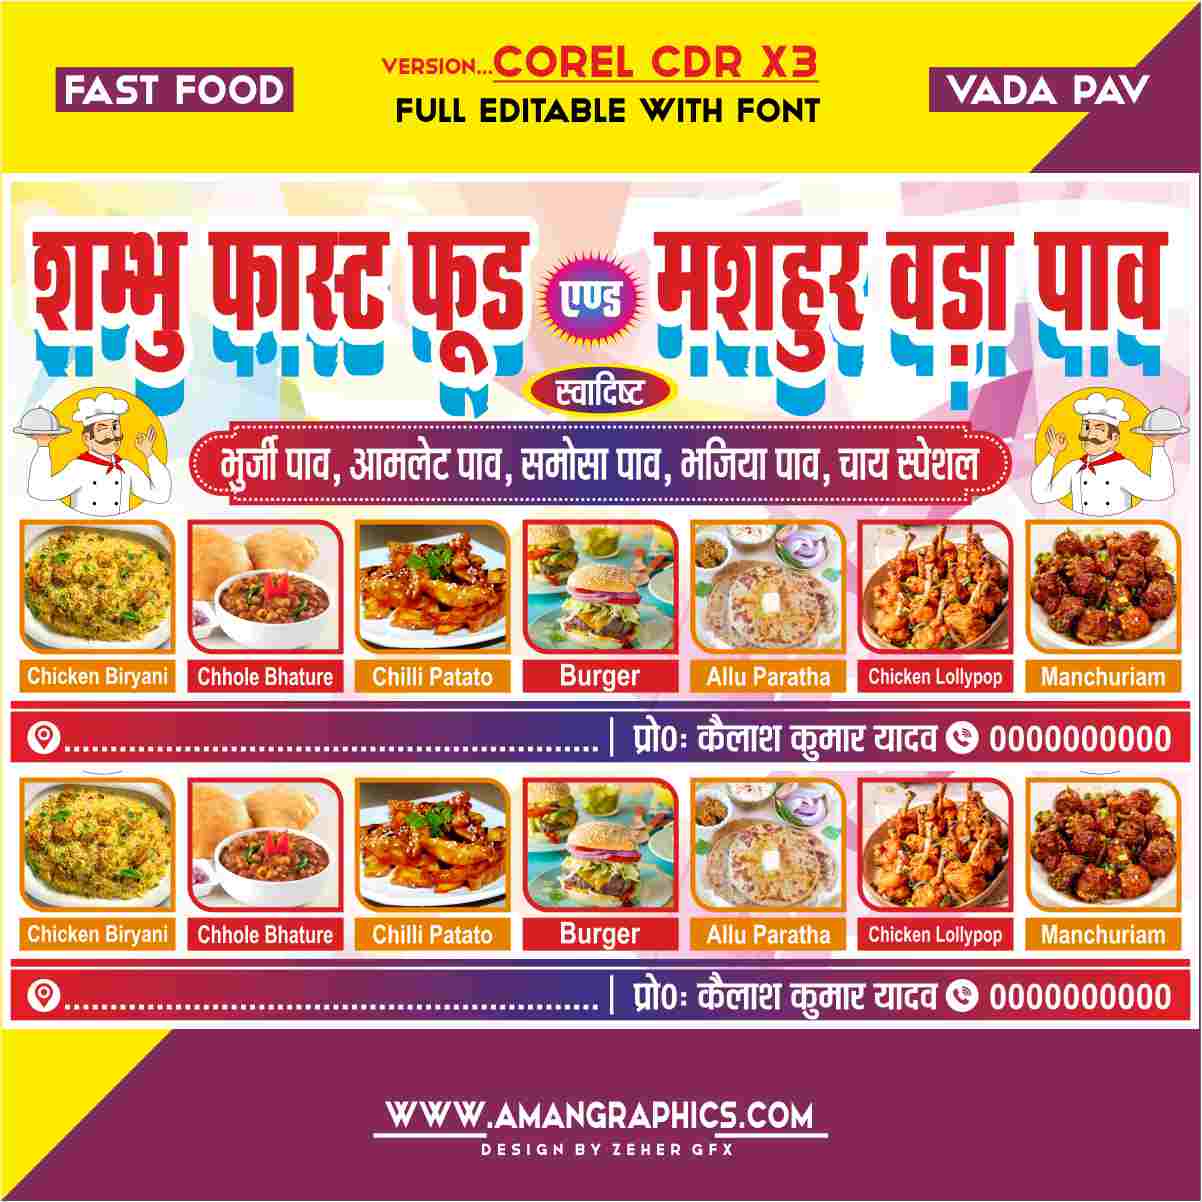 Shambhu Fast Food And Mashhur Vada Pav Banner Design Cdr File FLEX BANNER FAST FOOD BANNER